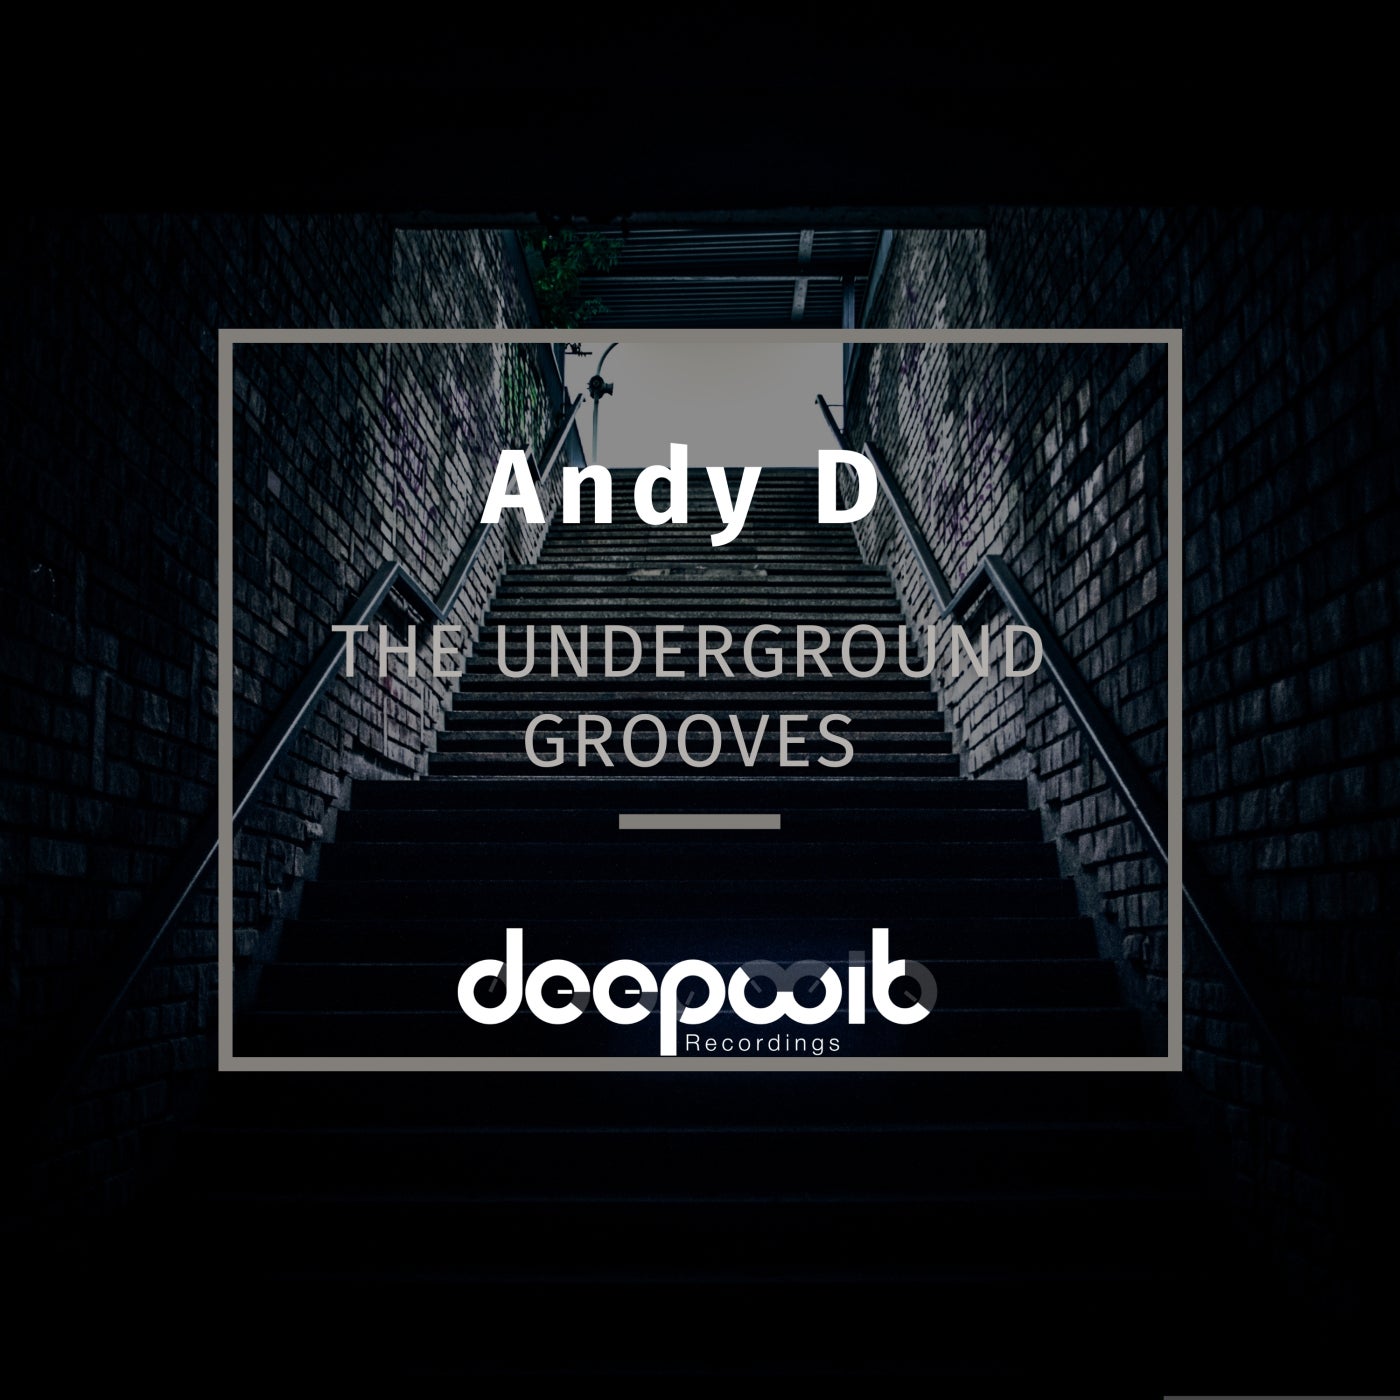 The Underground Grooves